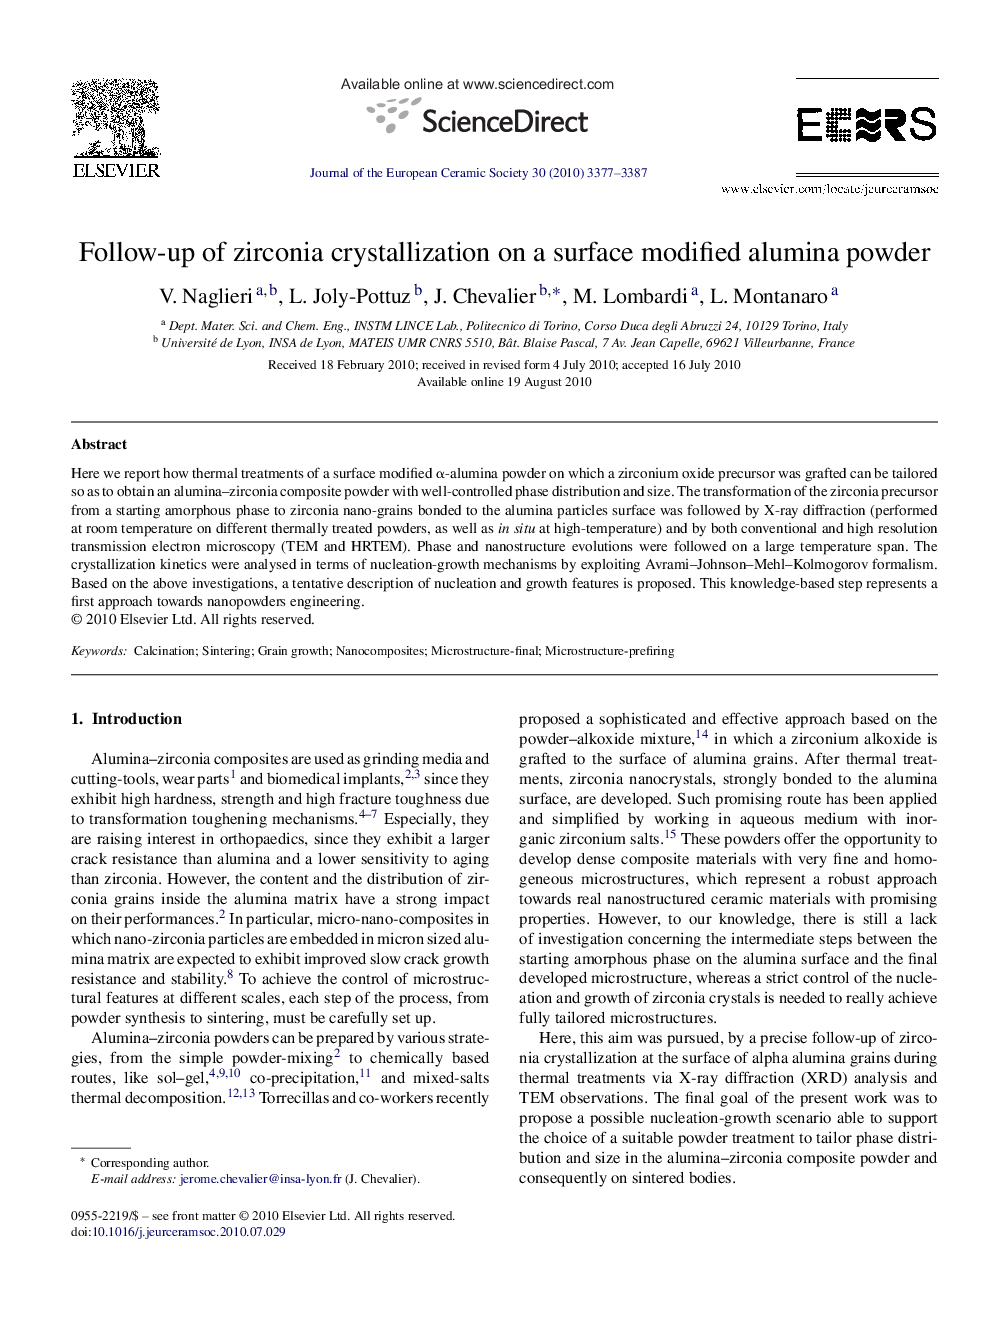 Follow-up of zirconia crystallization on a surface modified alumina powder